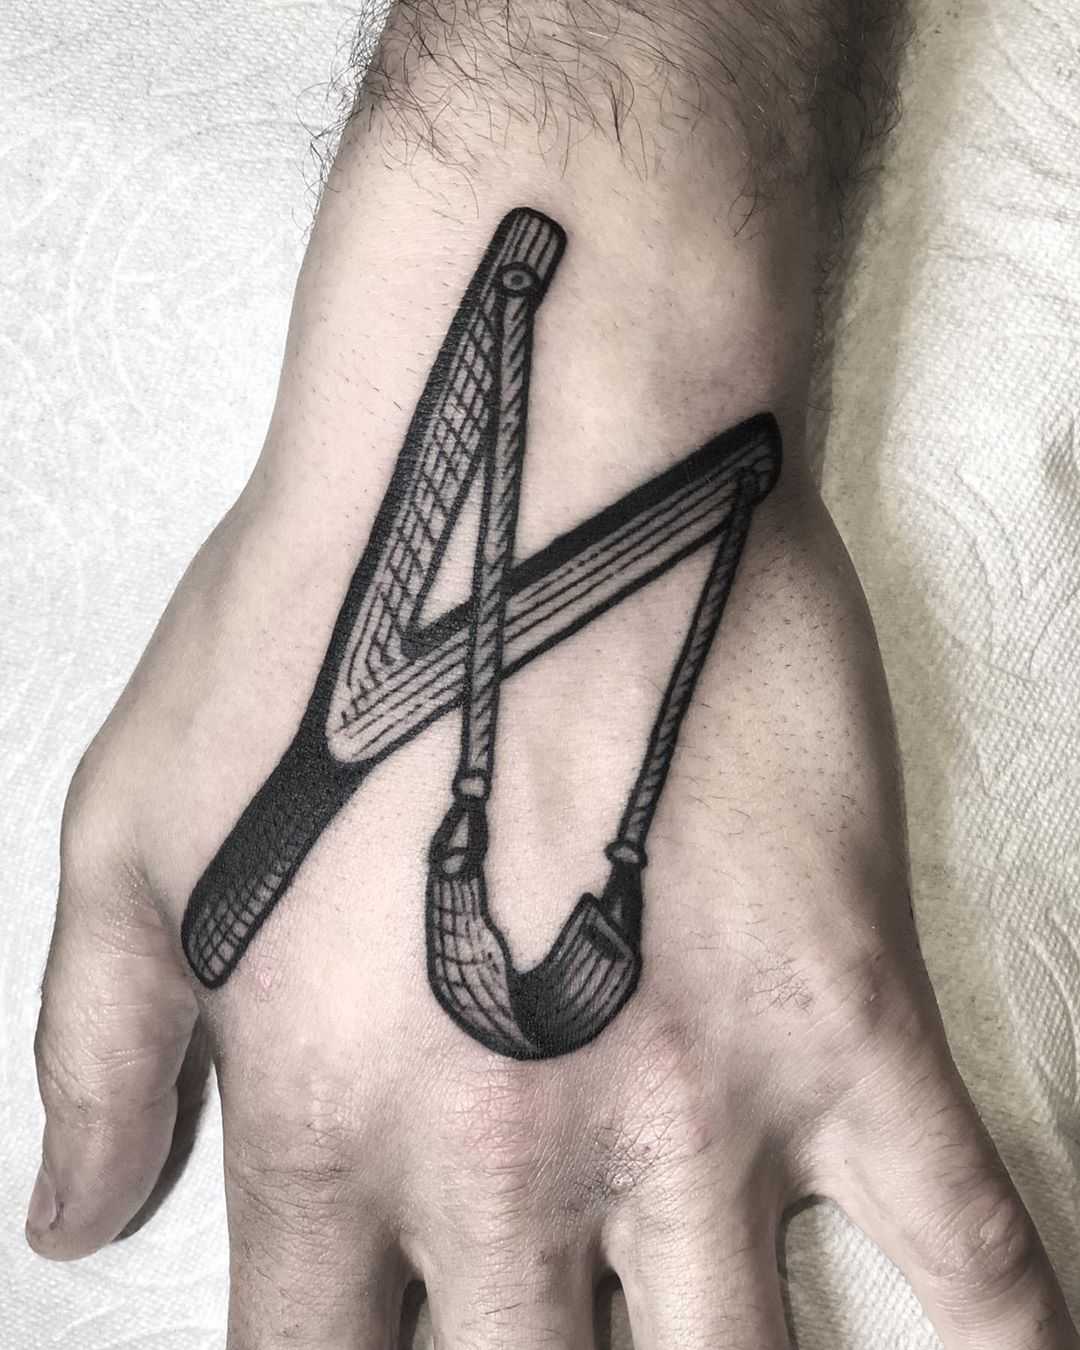 Sling shot by tattooist MAIC